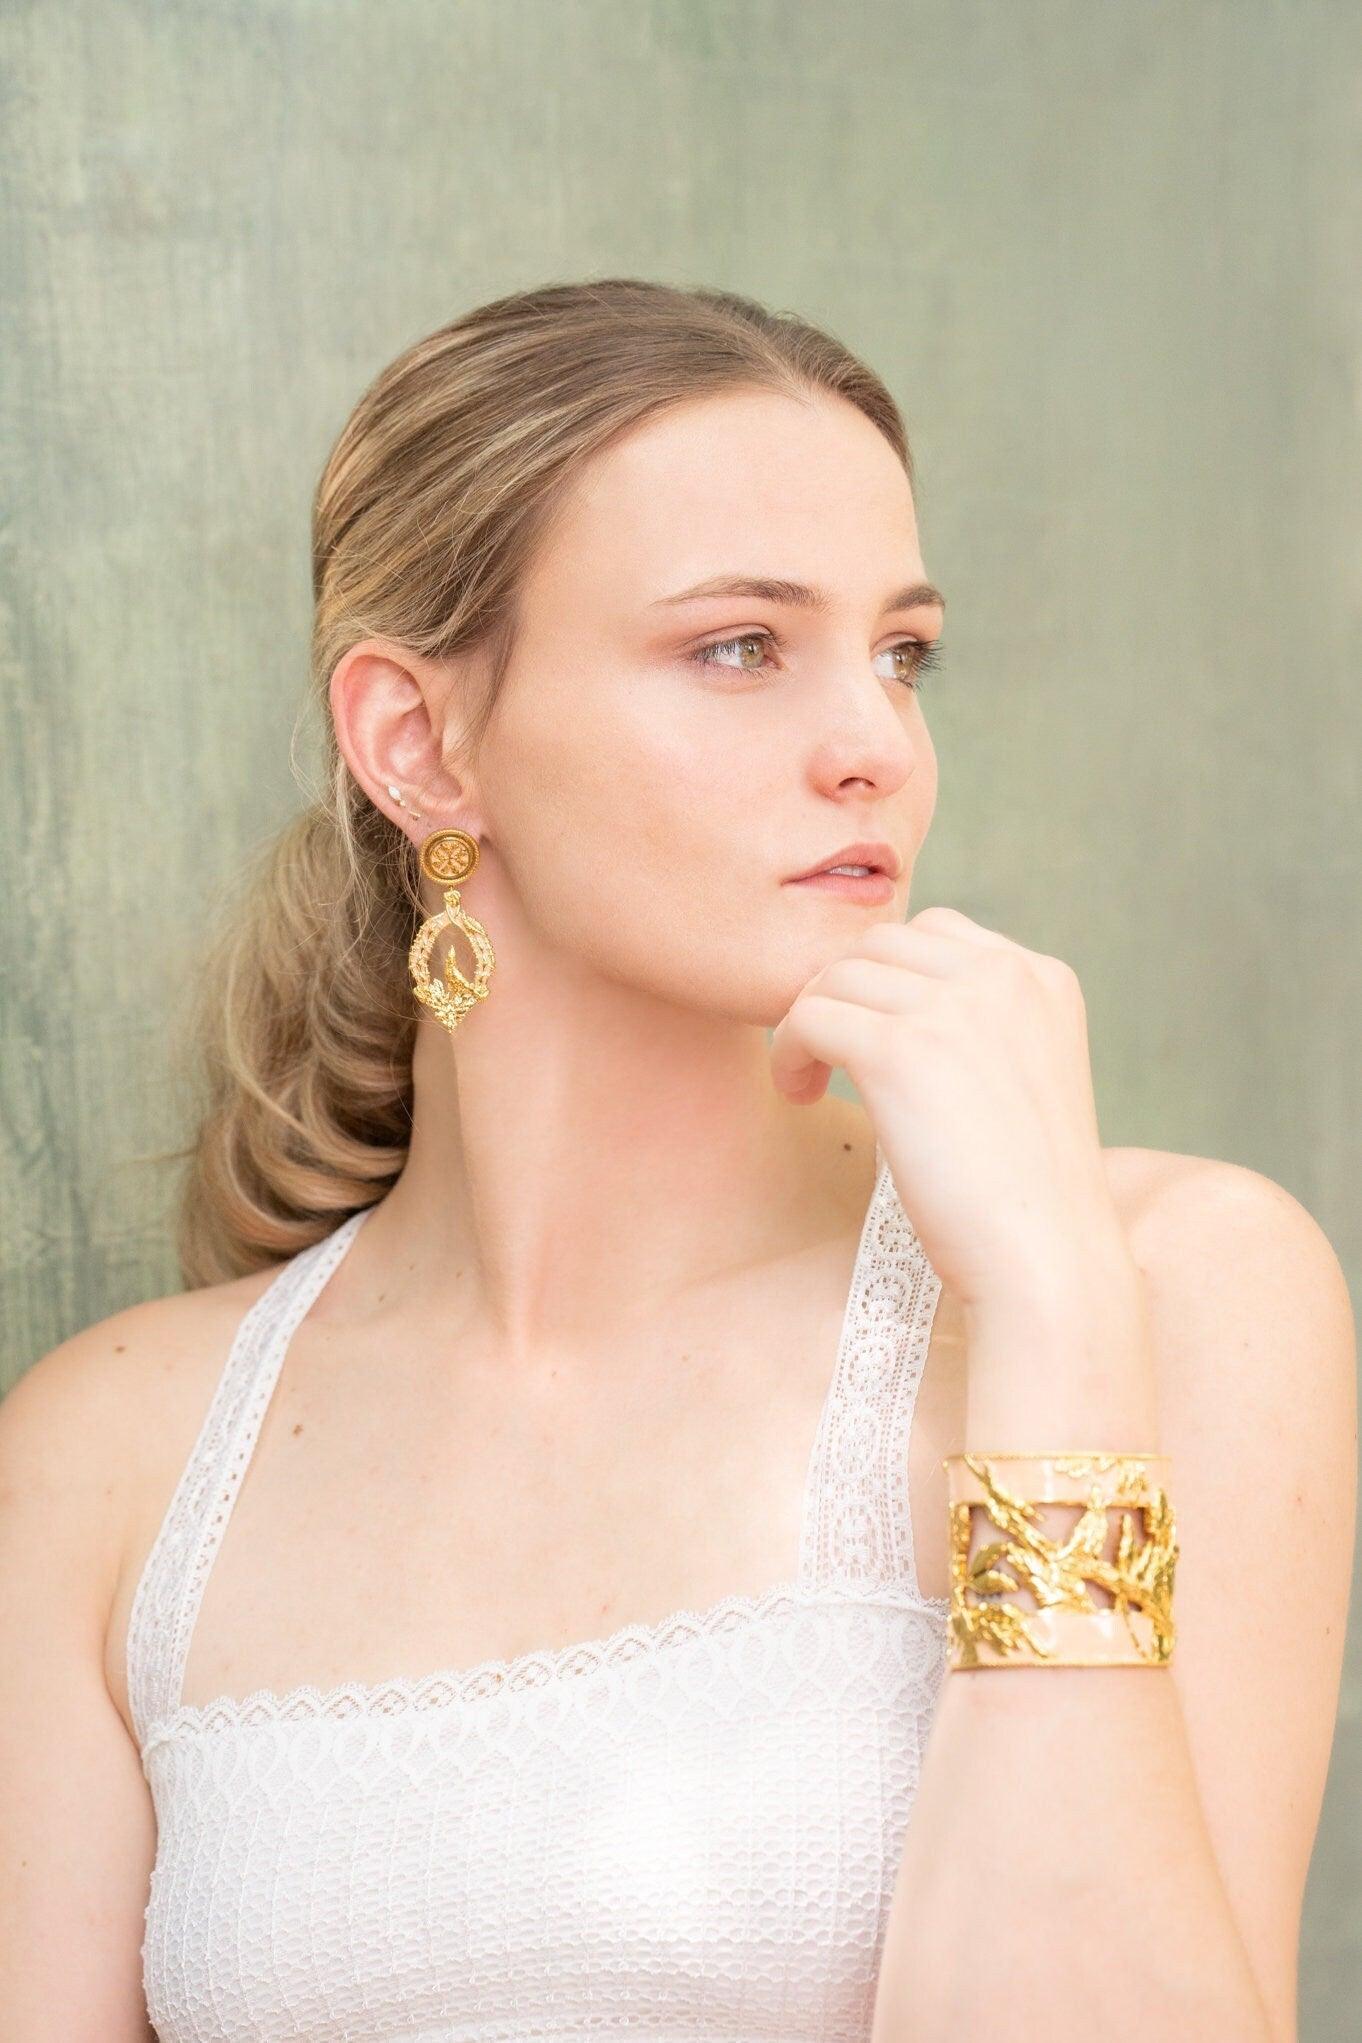 Unique Cuff Bracelet "Vigor" - Gold & Blush Gift, Gift For Mom, Artistic, Jewelry Cuff, Bracelet, Gold, Silver, Brass